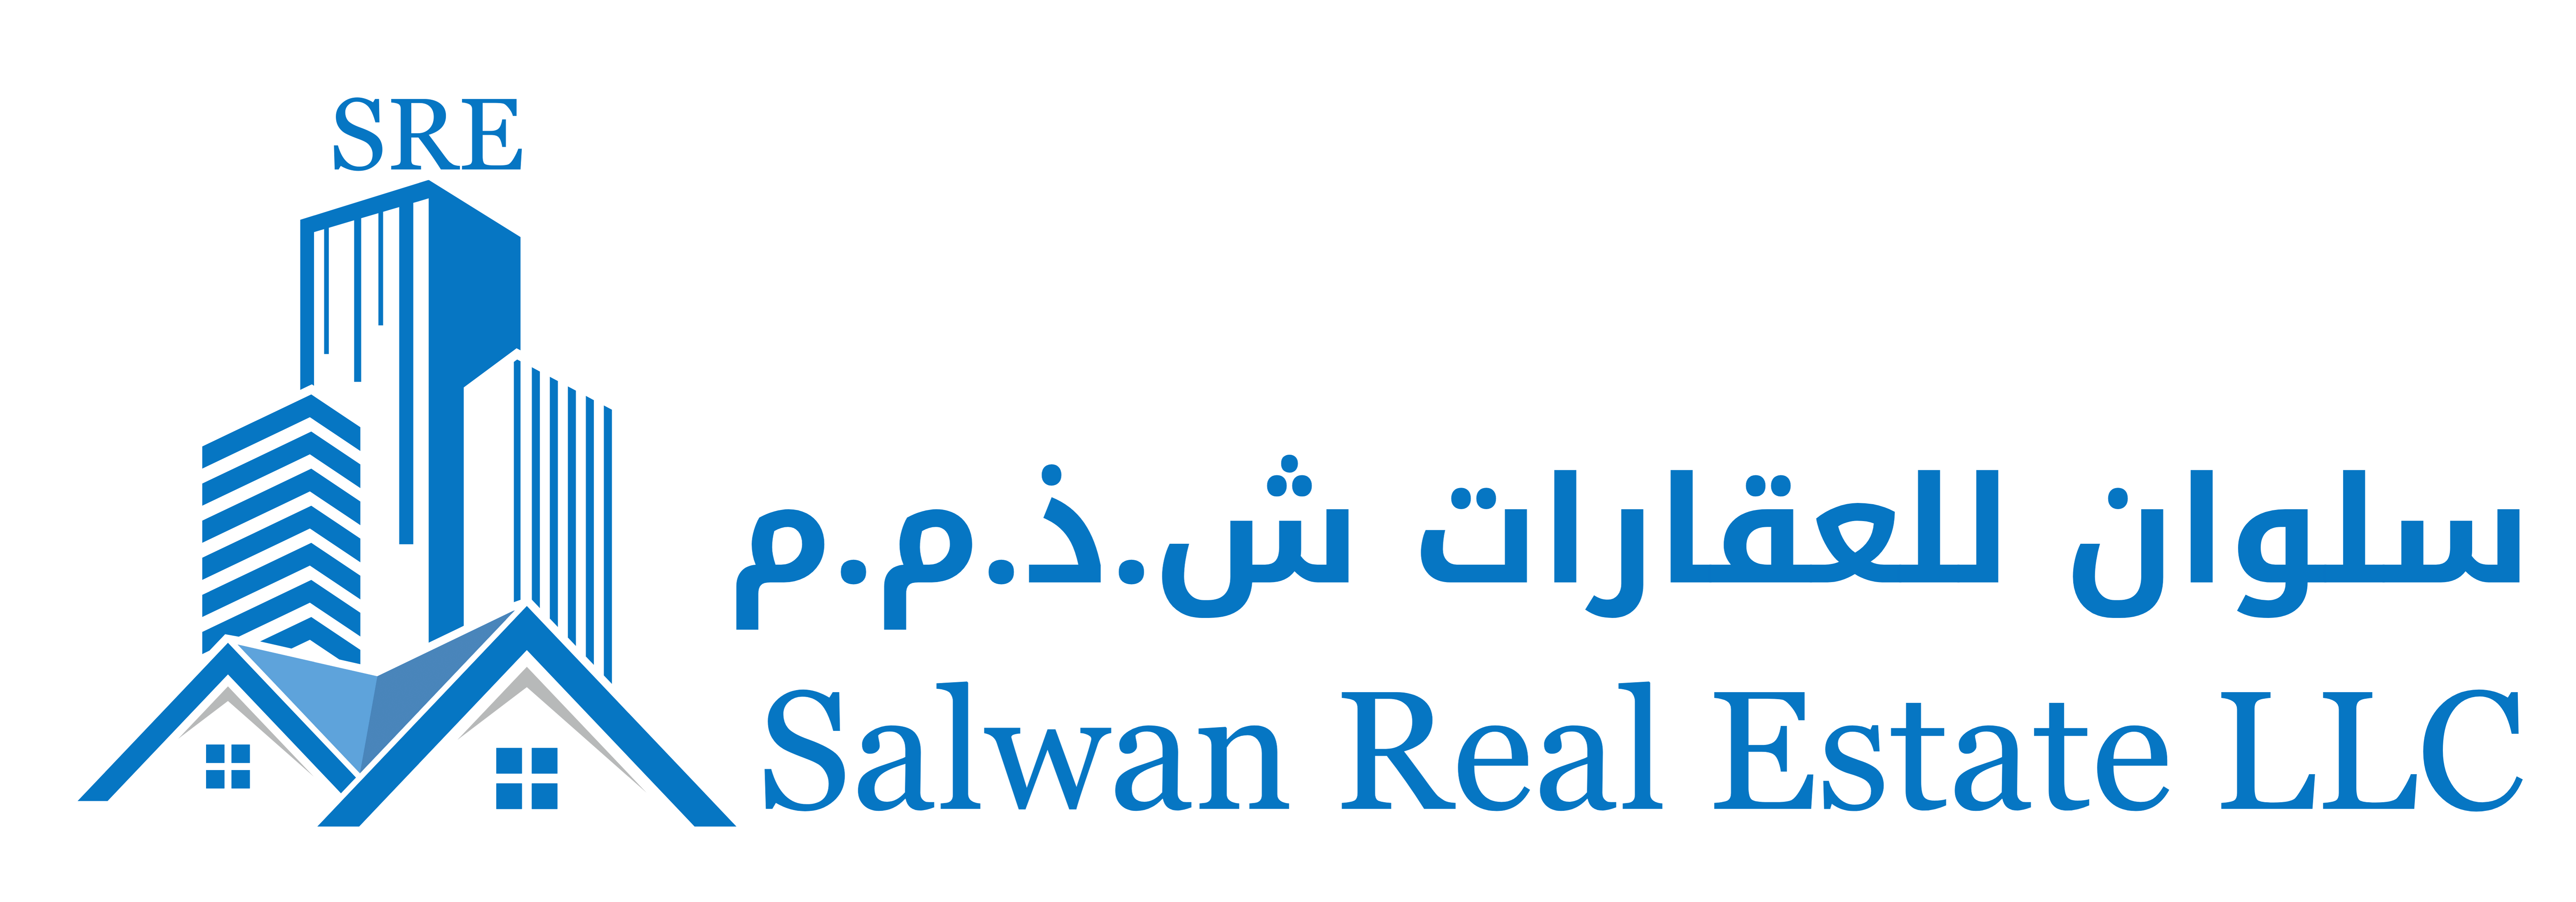 Salwan Real Estate